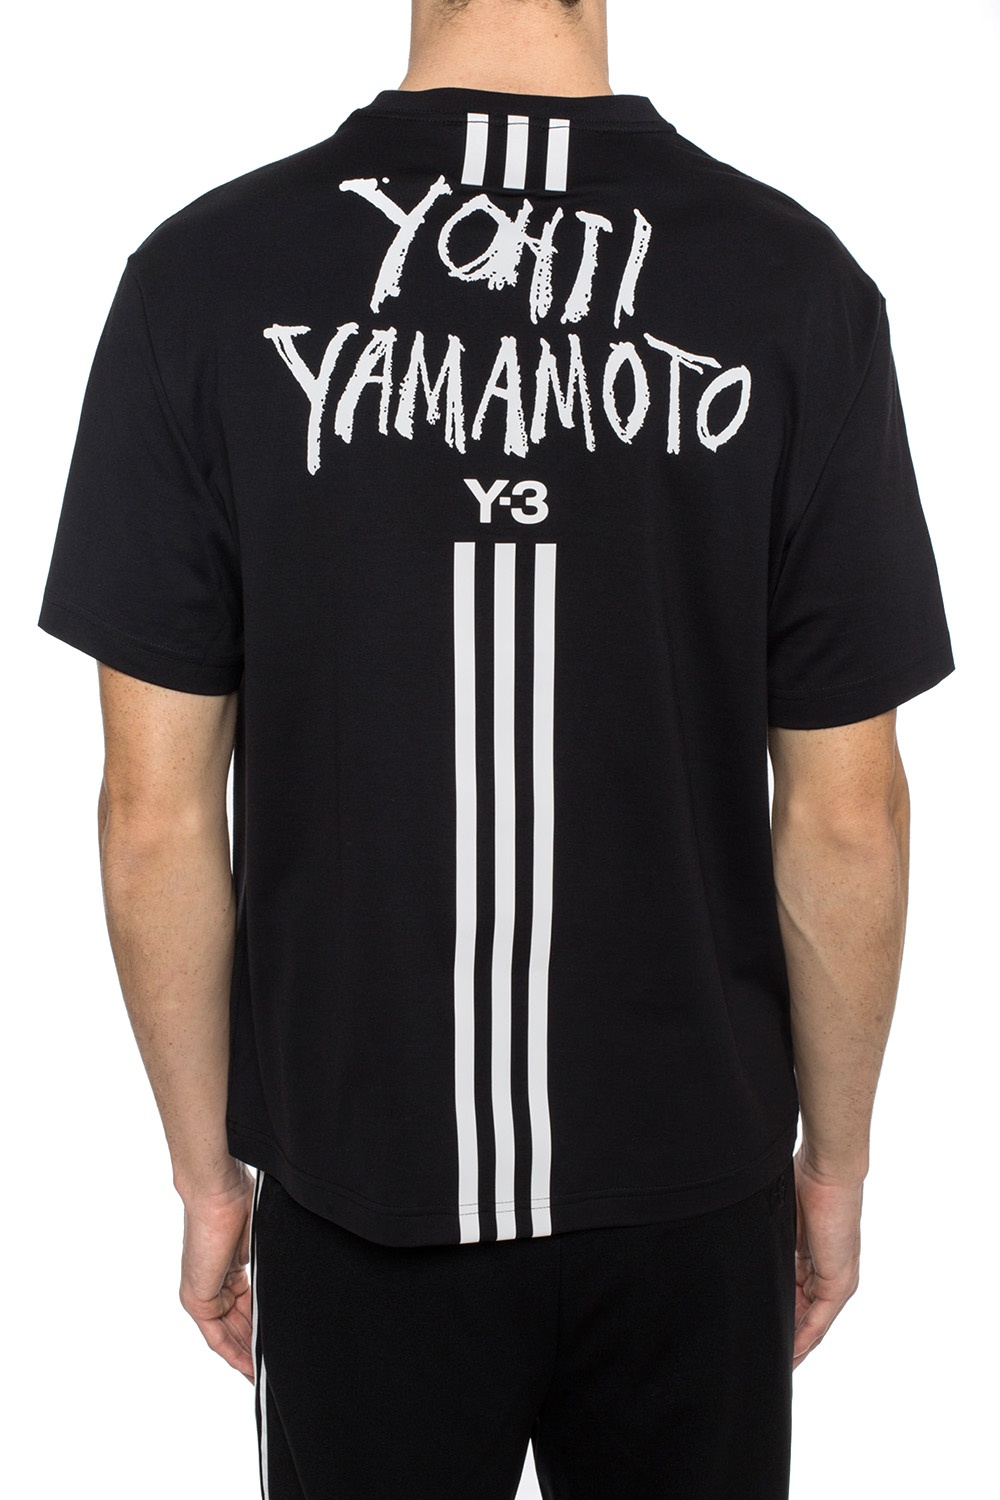 Y-3 Yohji Yamamoto Printed T-shirt | Men's Clothing | Vitkac